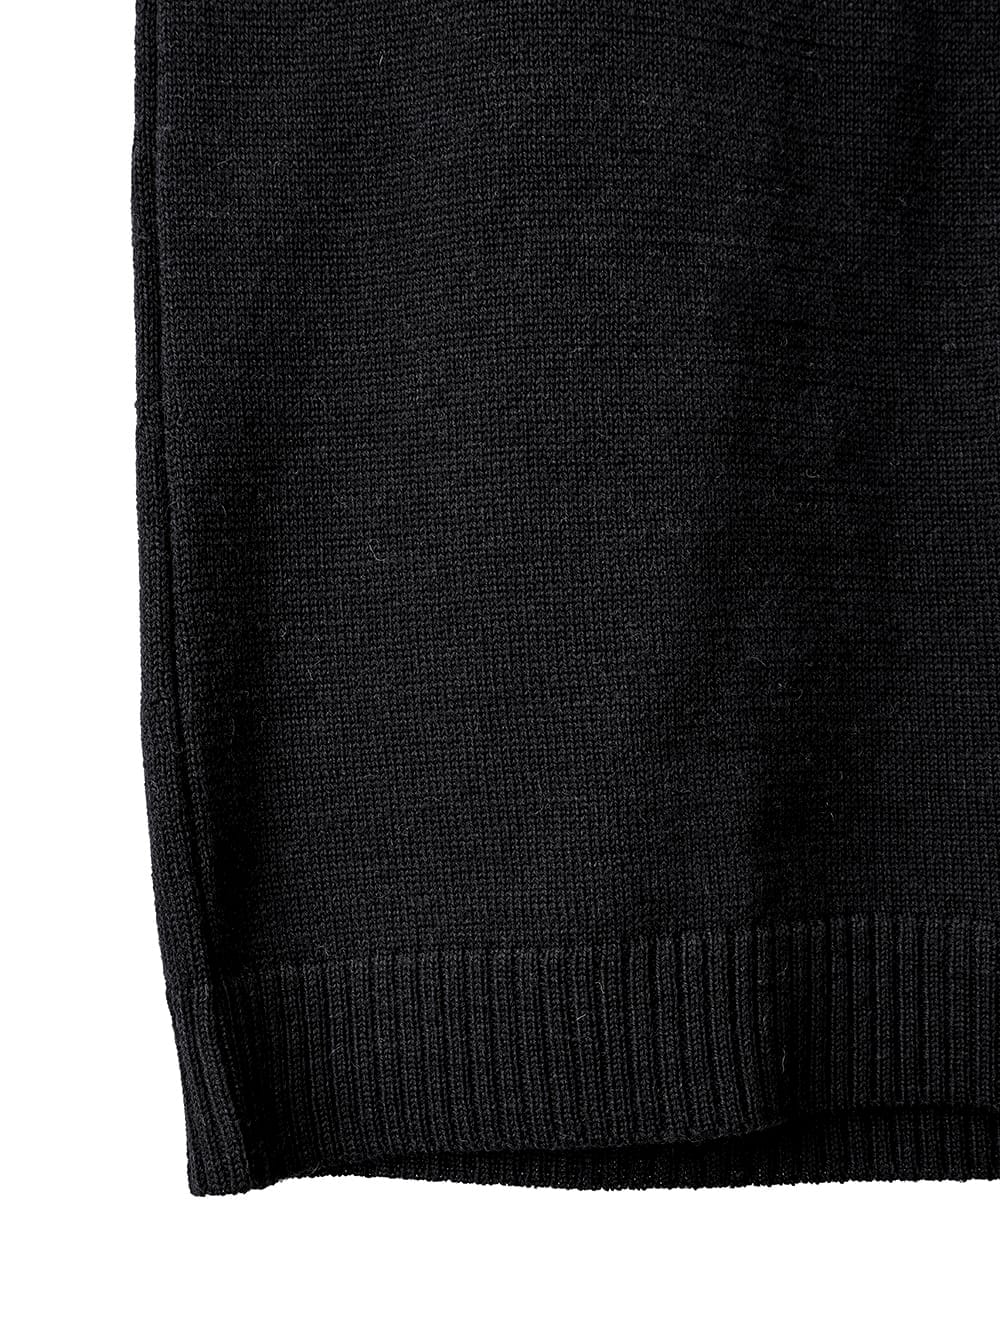 shetland wool maxi tight skirt.